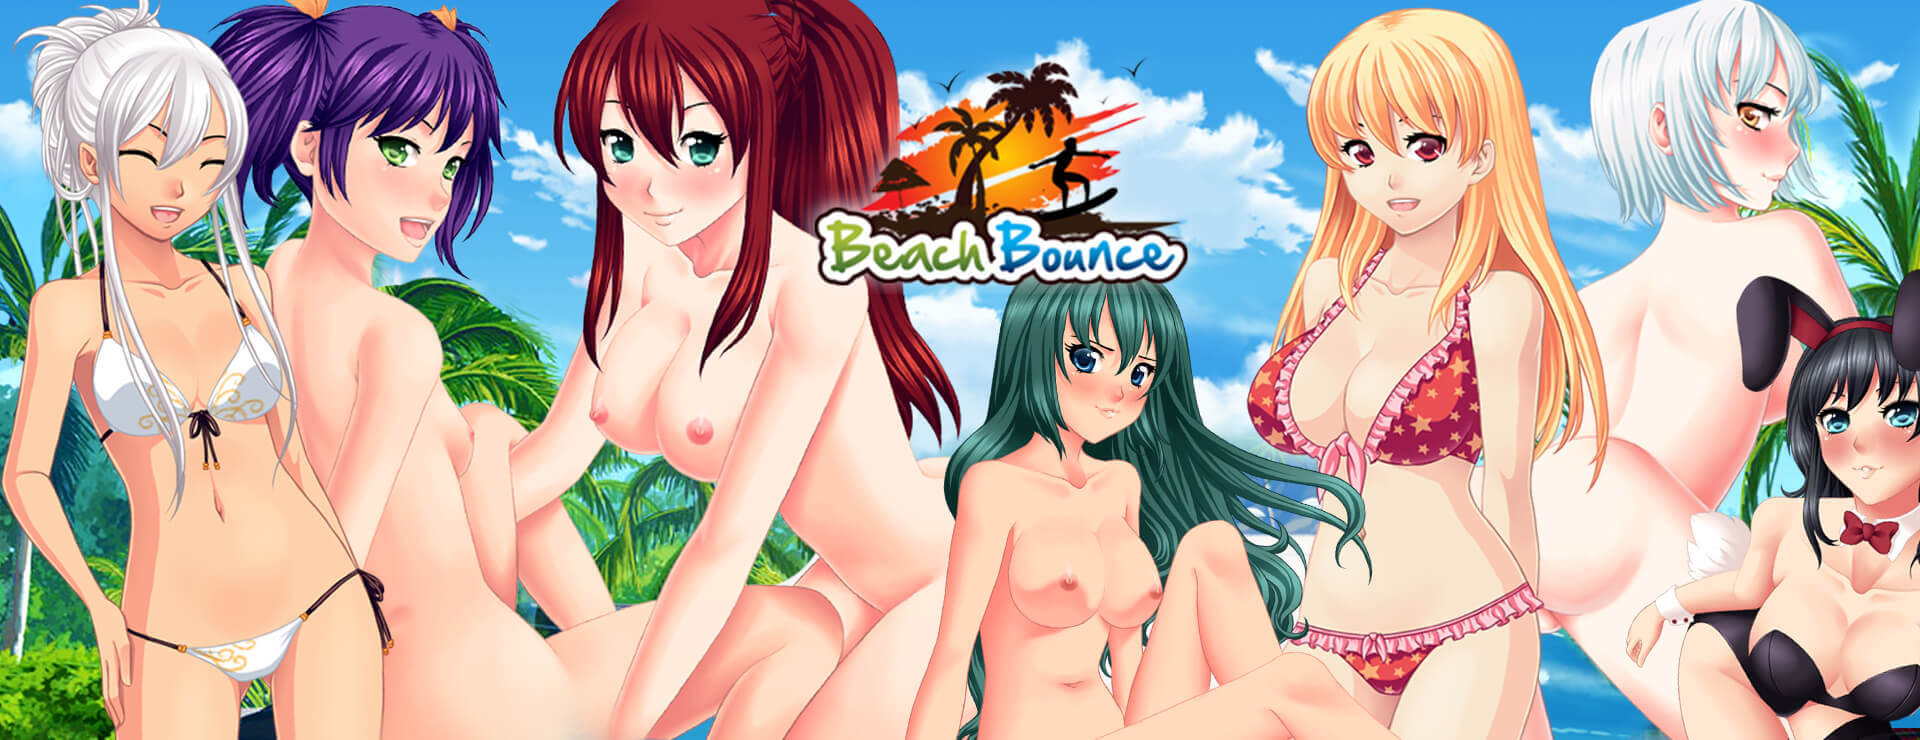 Beach Bounce - 虚拟小说 遊戲